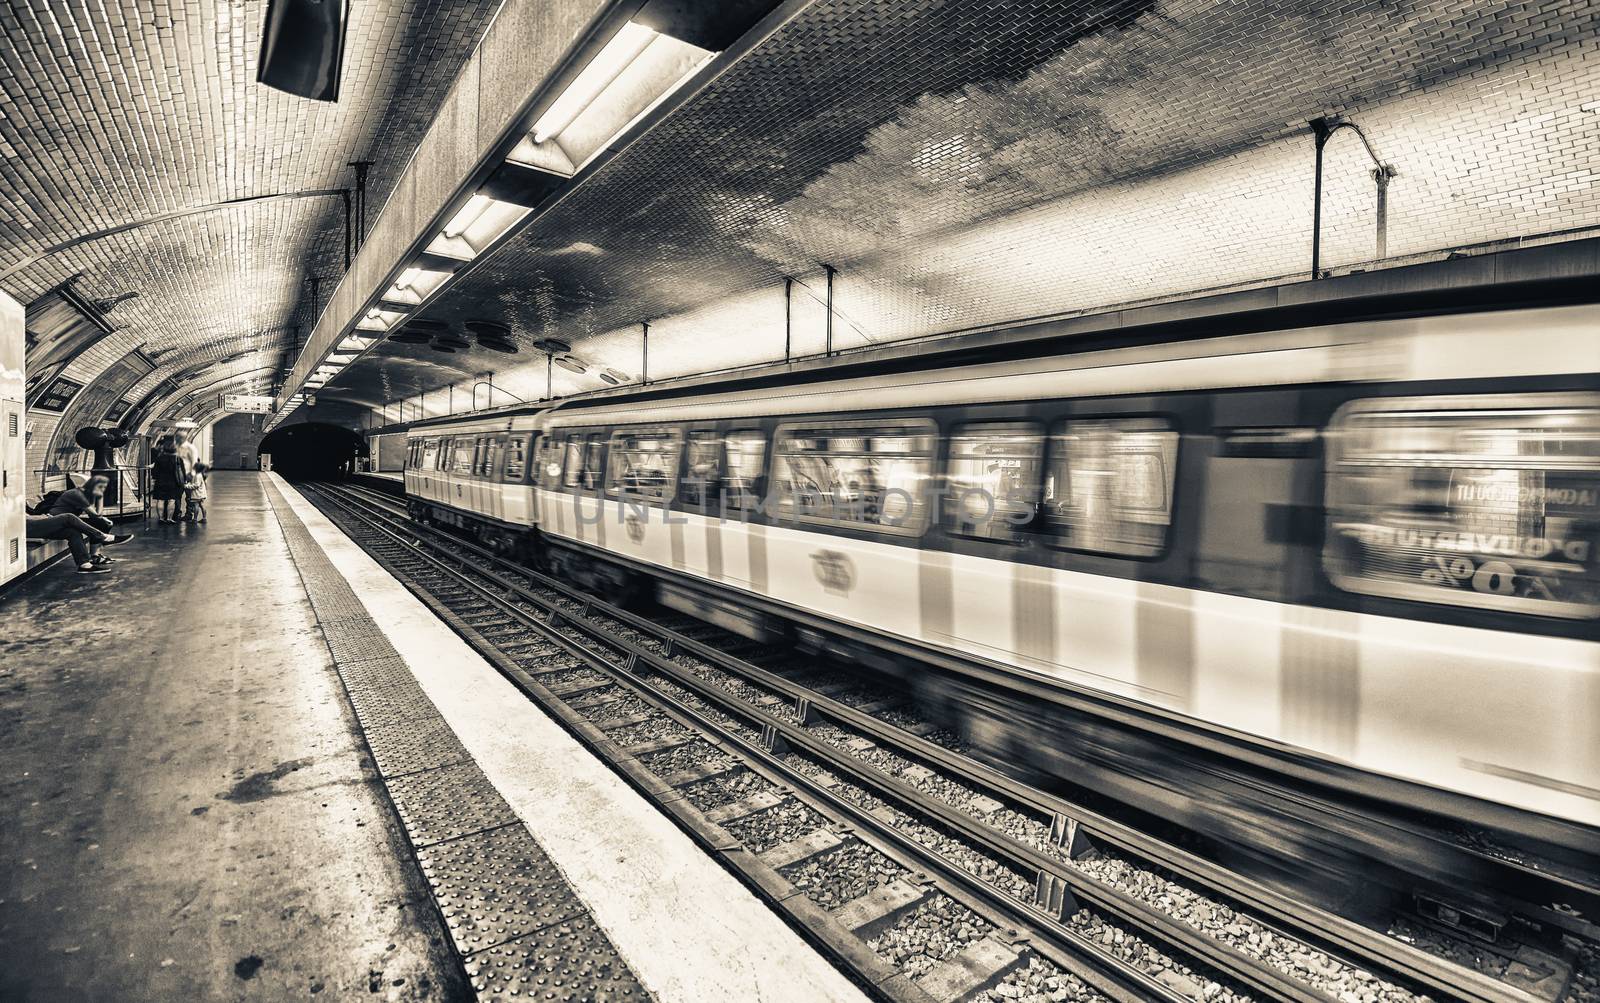 Pairs. Metro train speeding up in the subway by jovannig